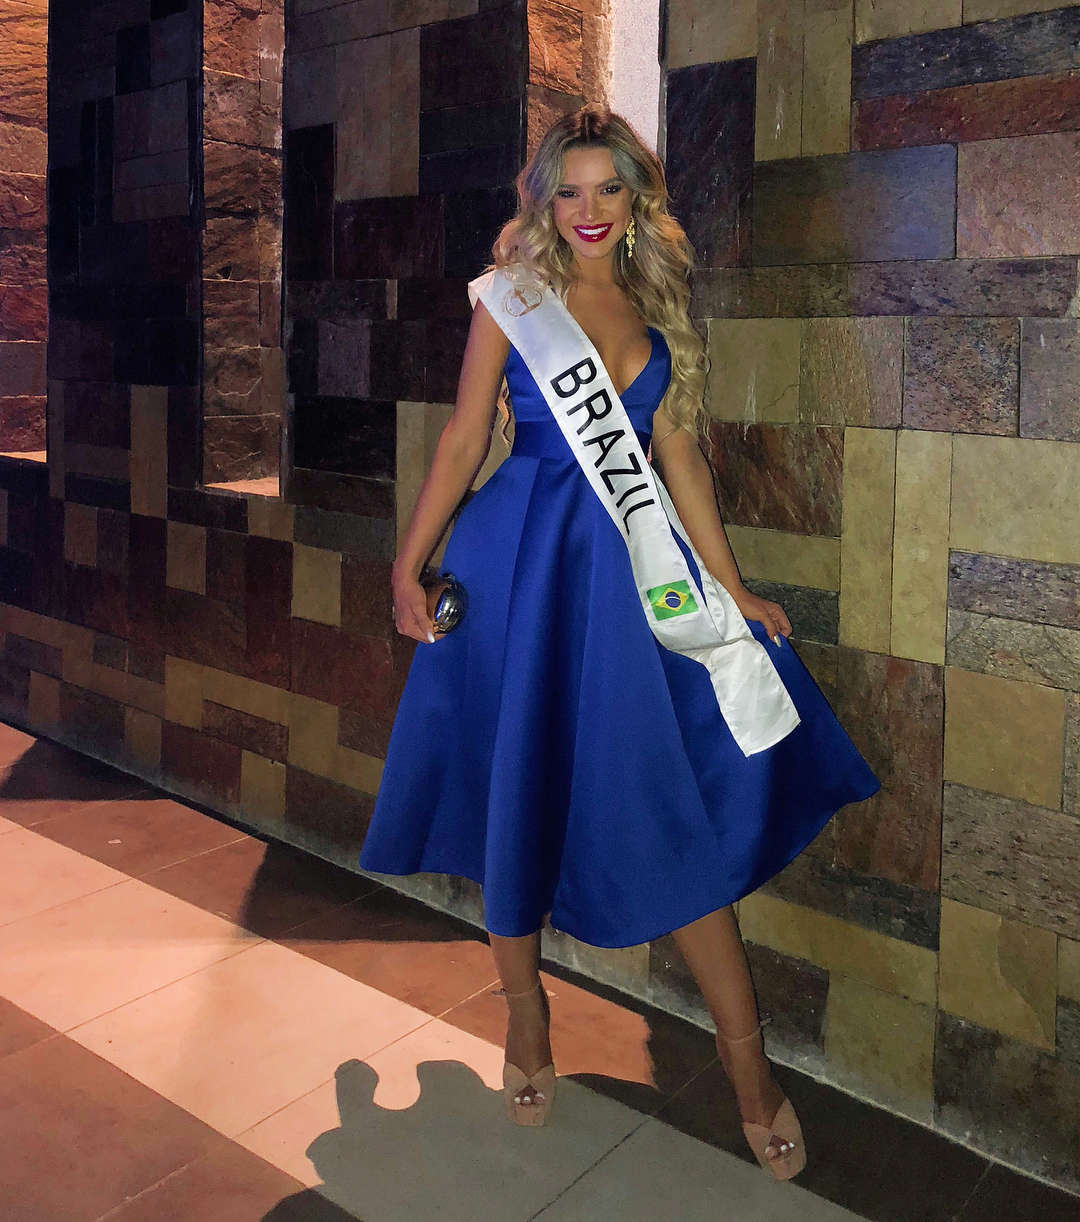 amanda cardoso, miss grand espirito santo 2019/3rd runner-up de miss intercontinental 2017. - Página 5 26066113